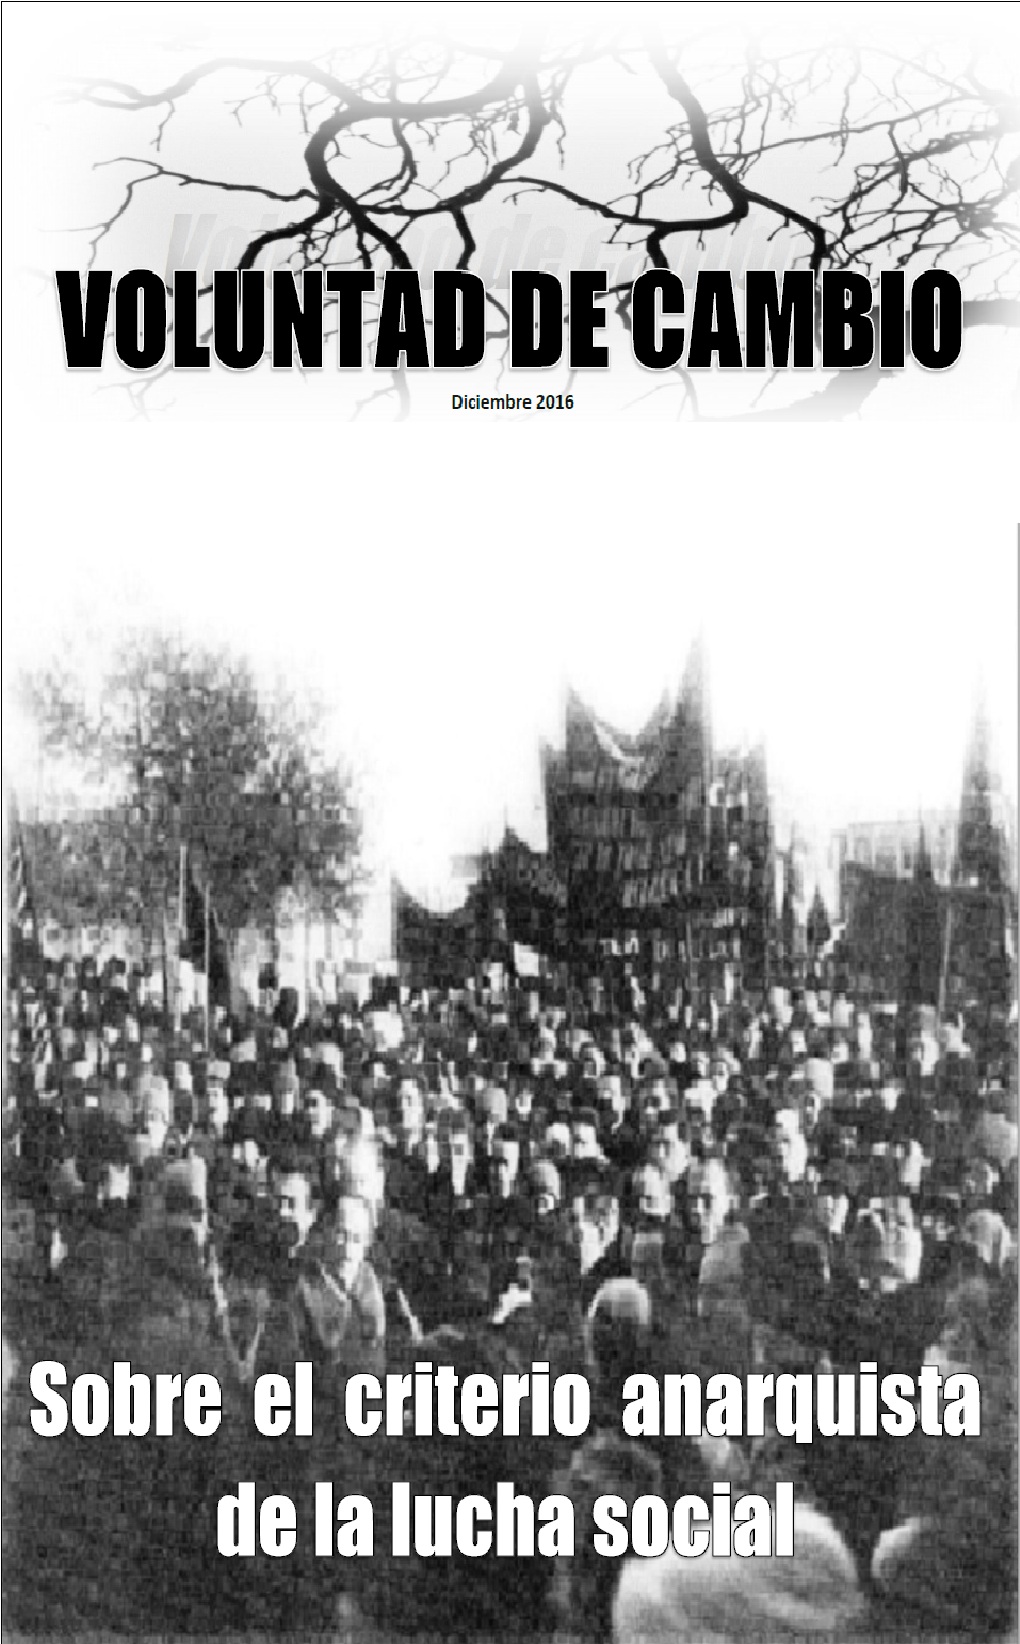 FOLLETO VOLUNTAD DE CAMBIO LUCHA SOCIAL